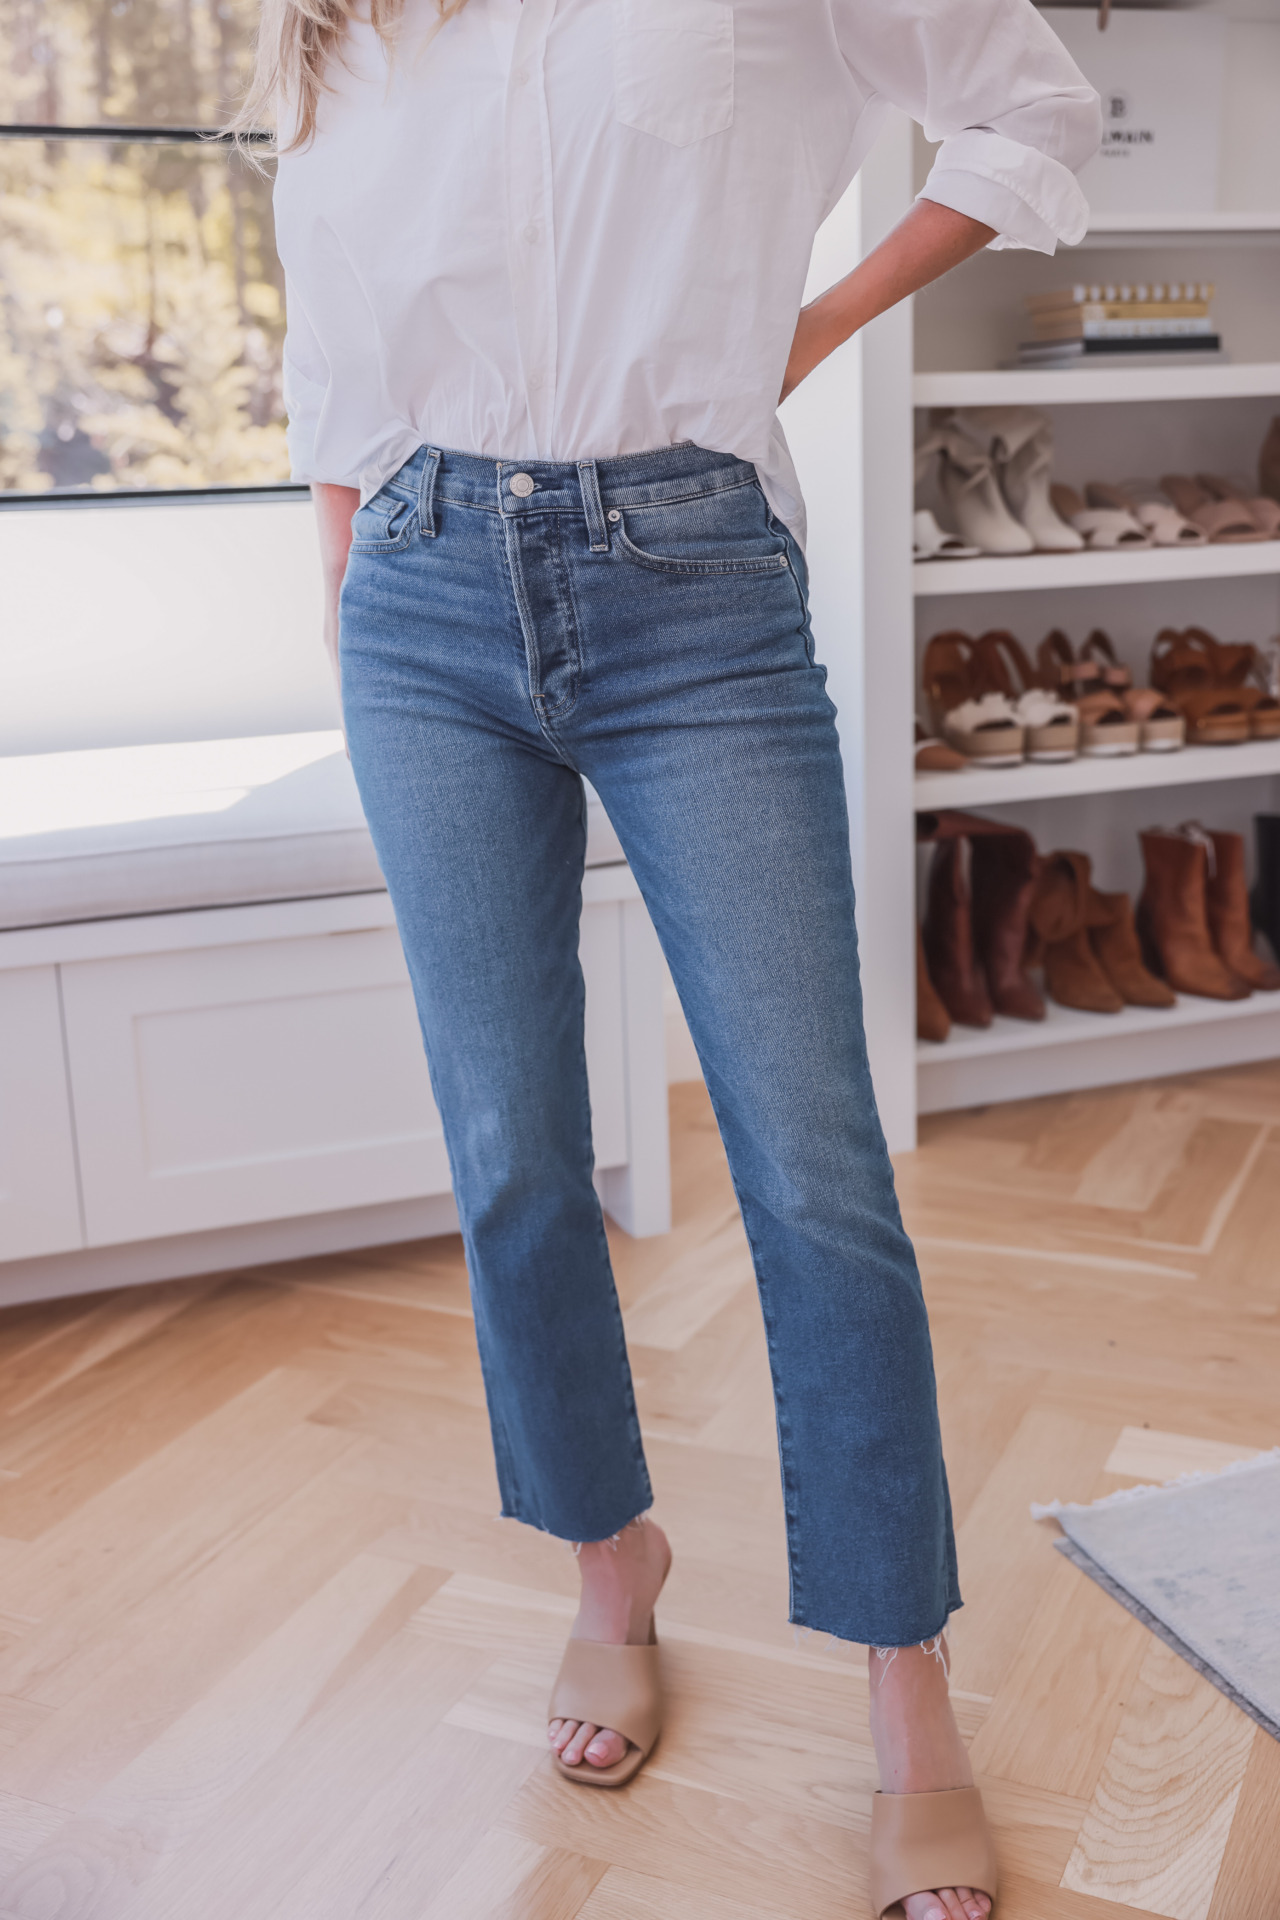 cork everyday  jeans | Invest In Wardrobe Basics